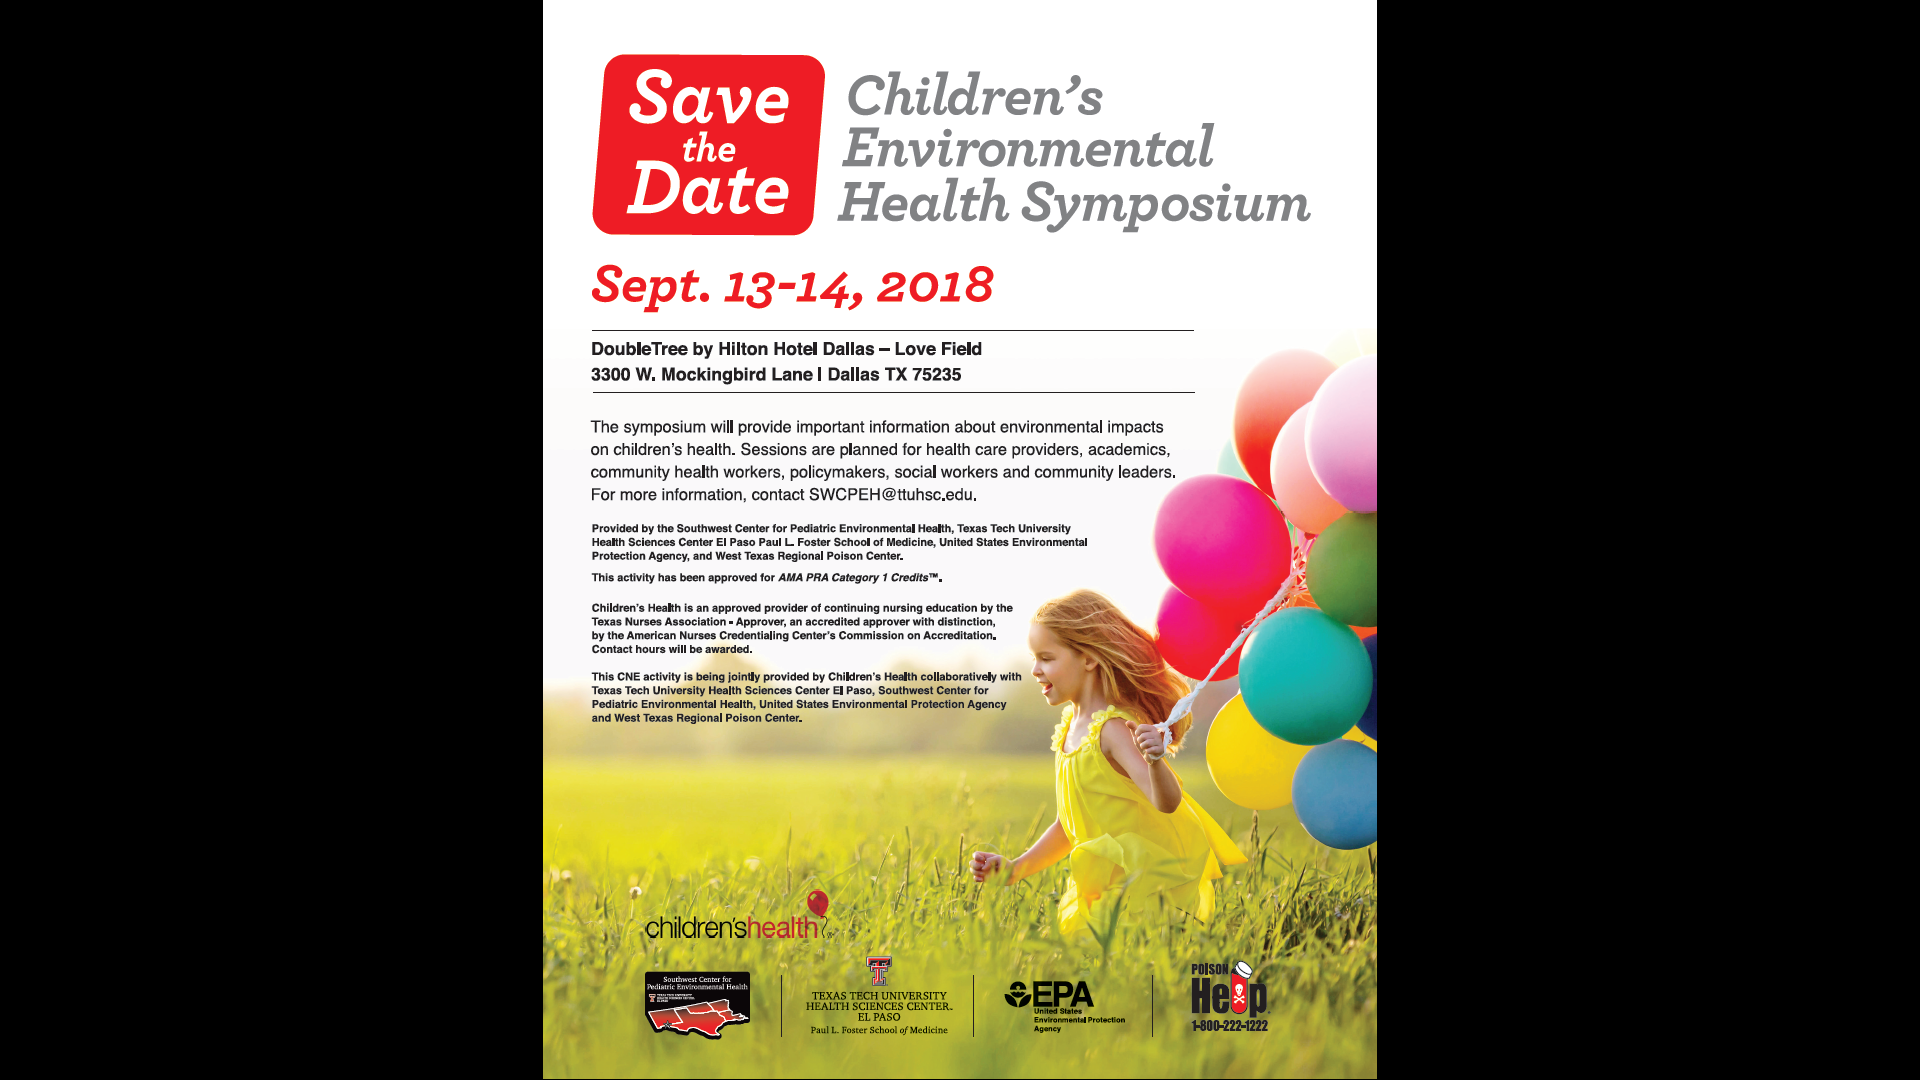 The Children's Environmental Health Symposium 